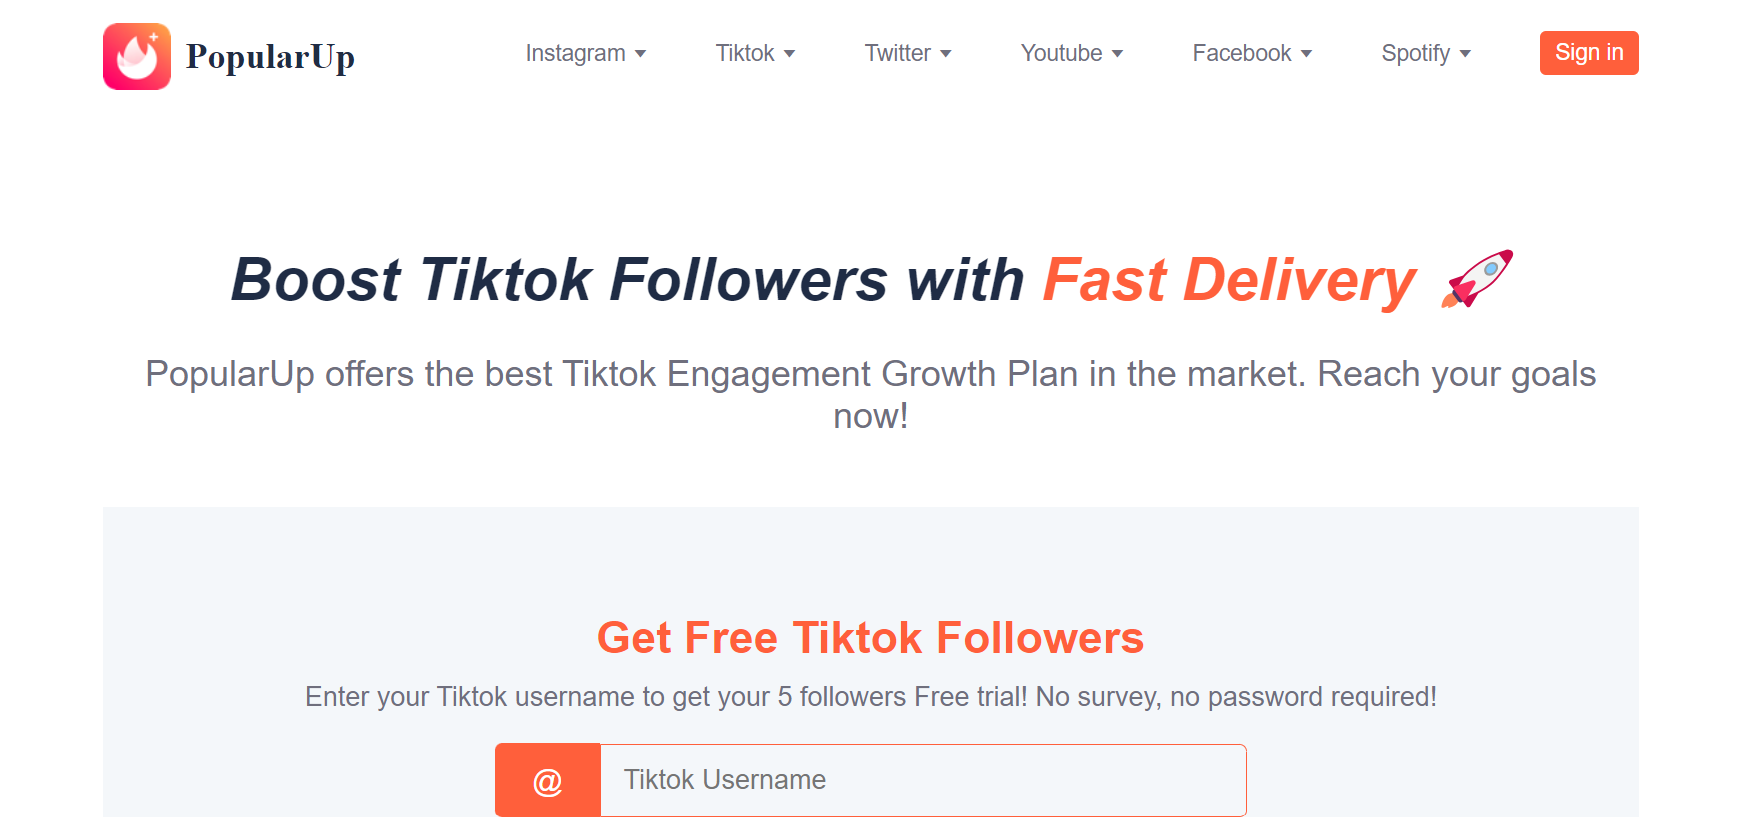 tiktok verified account Magnet for Sale by aspolaris17